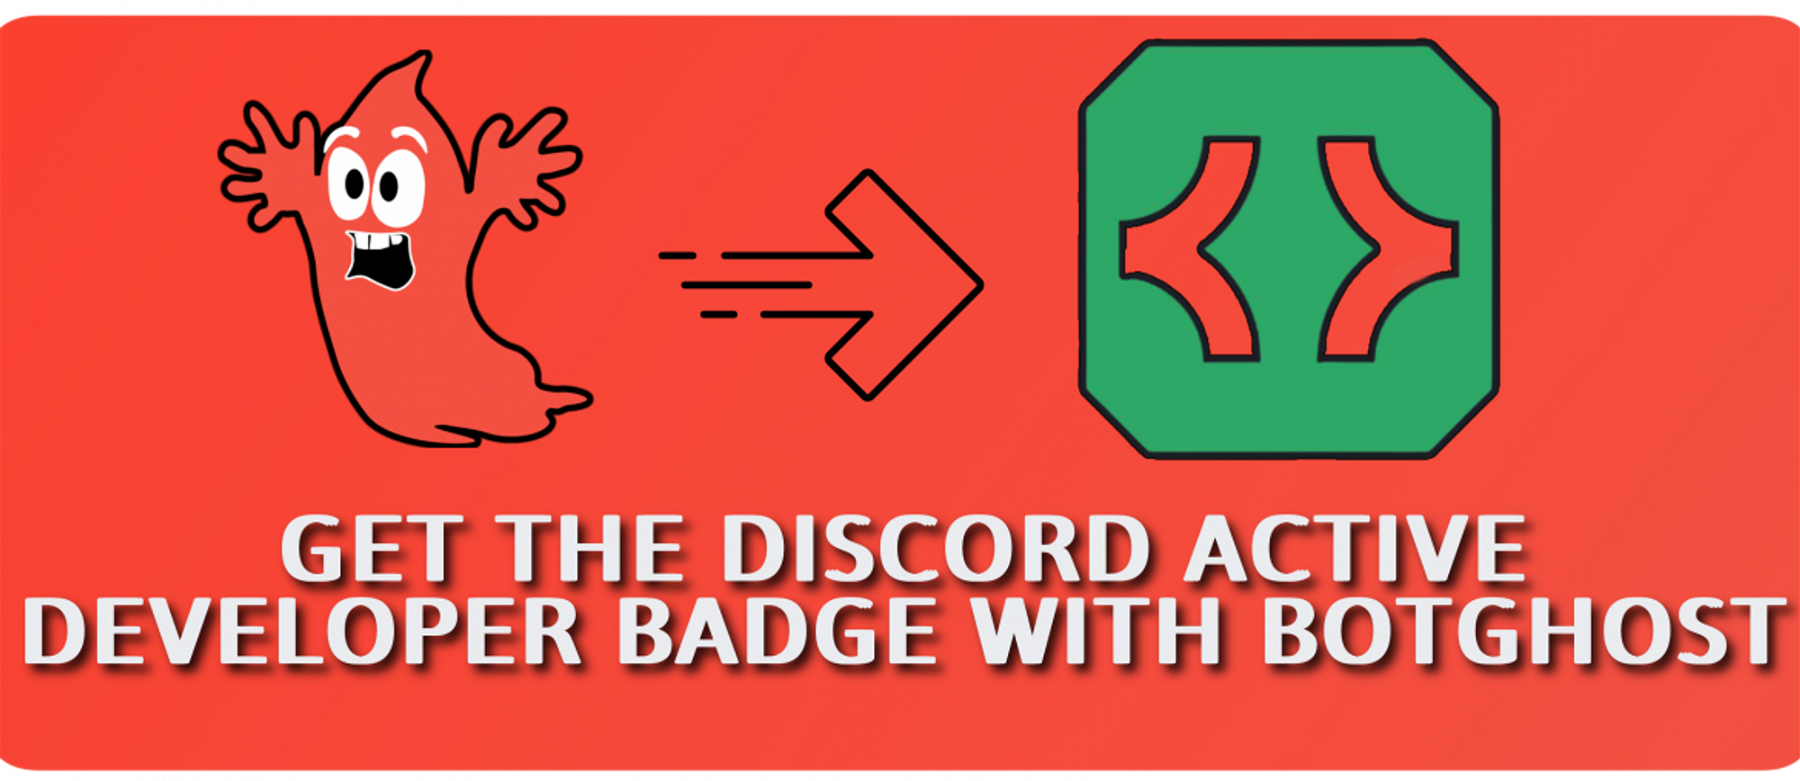 Most expensive badges on discord! #discord #discordhacks #discordsecre, how to get active developer badge